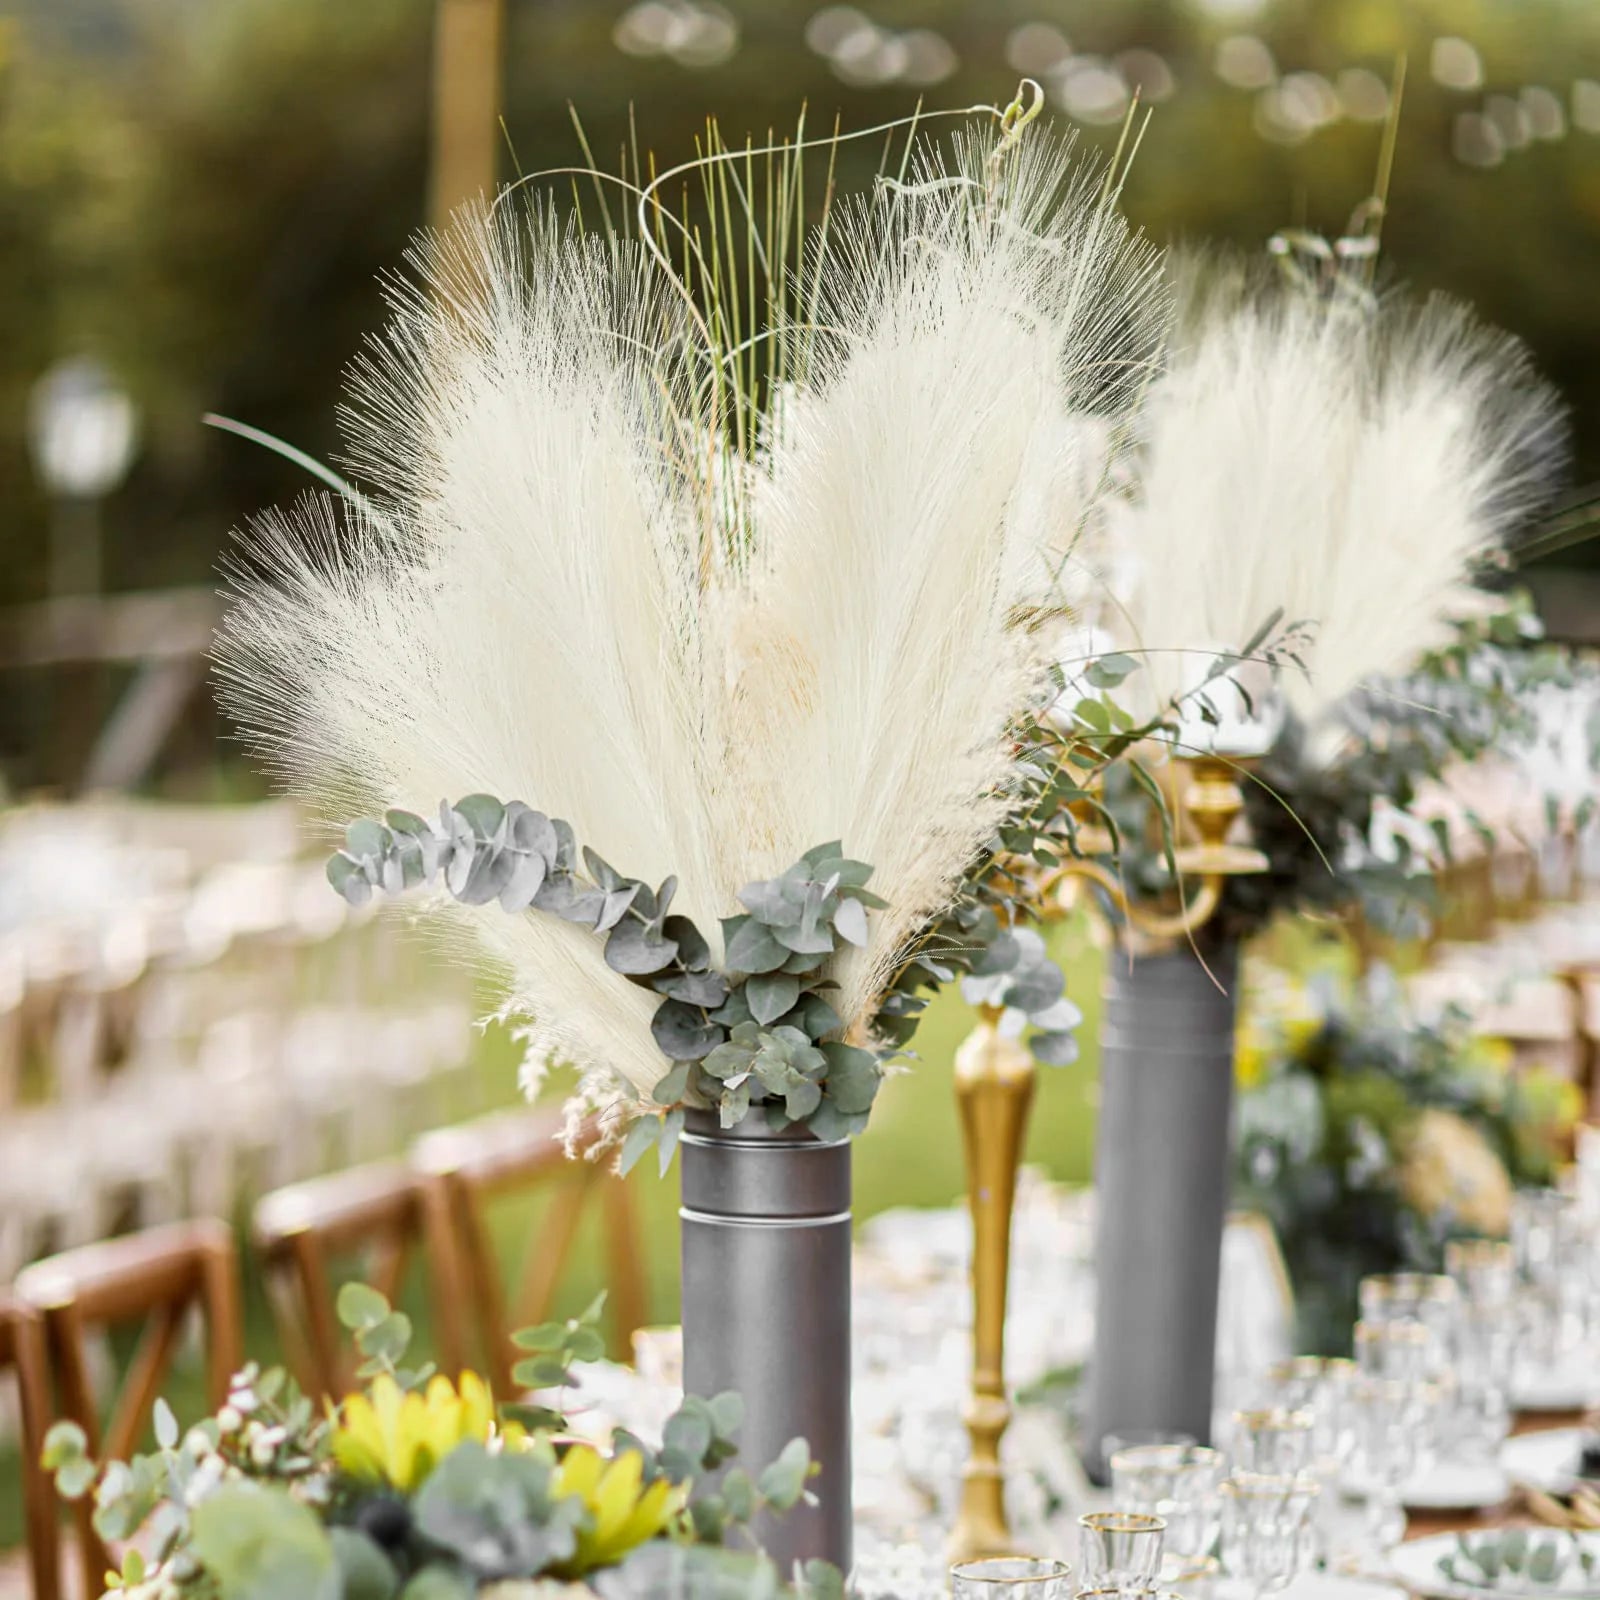 Stunning Fluffy Artificial Pampas Grass Bouquets - Endless Possibilities! - LuxycDécor